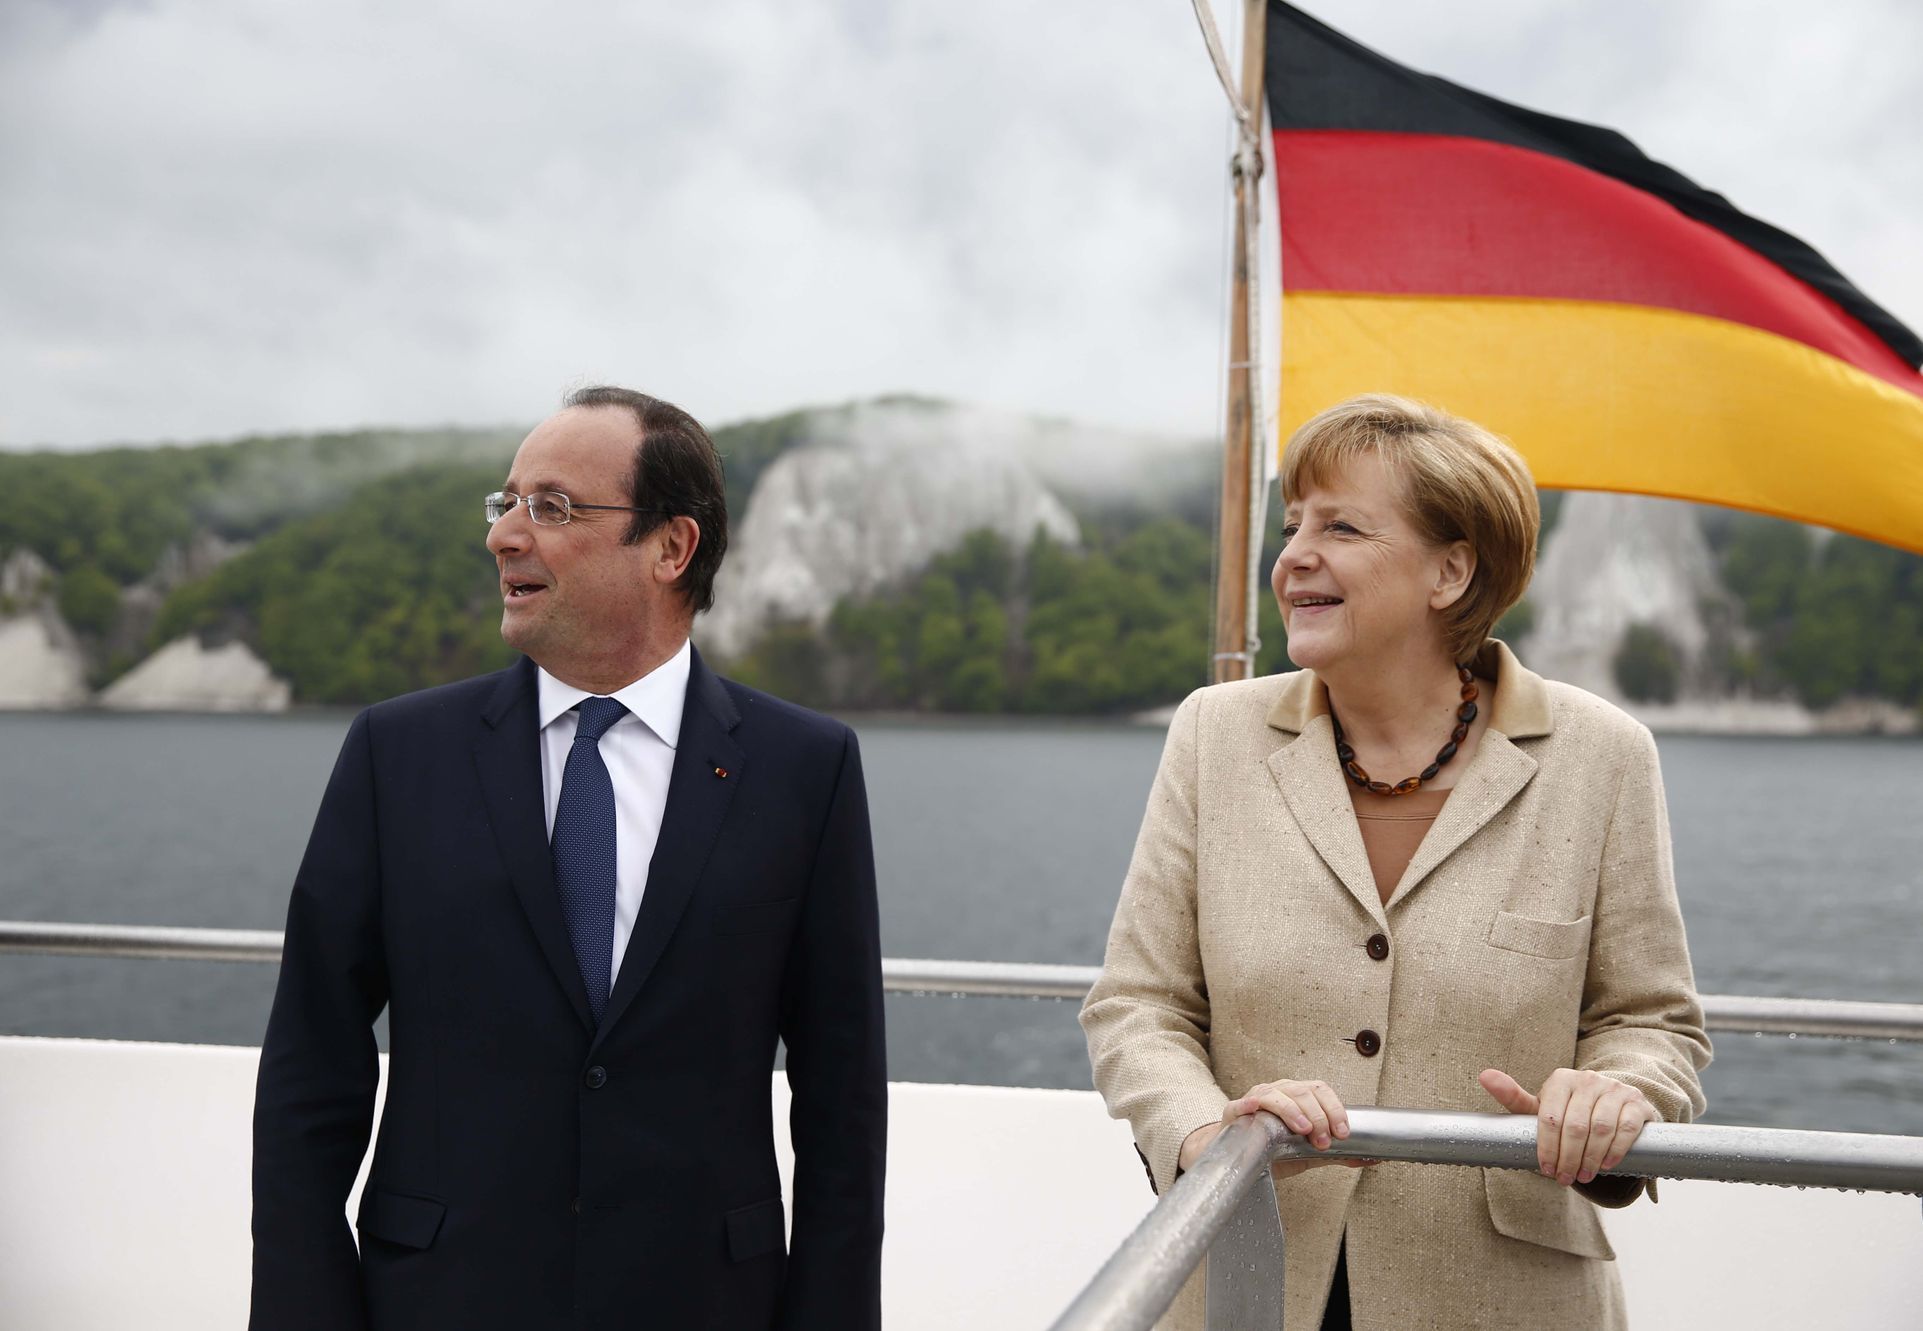 Angela Merkelová a Francois Hollande